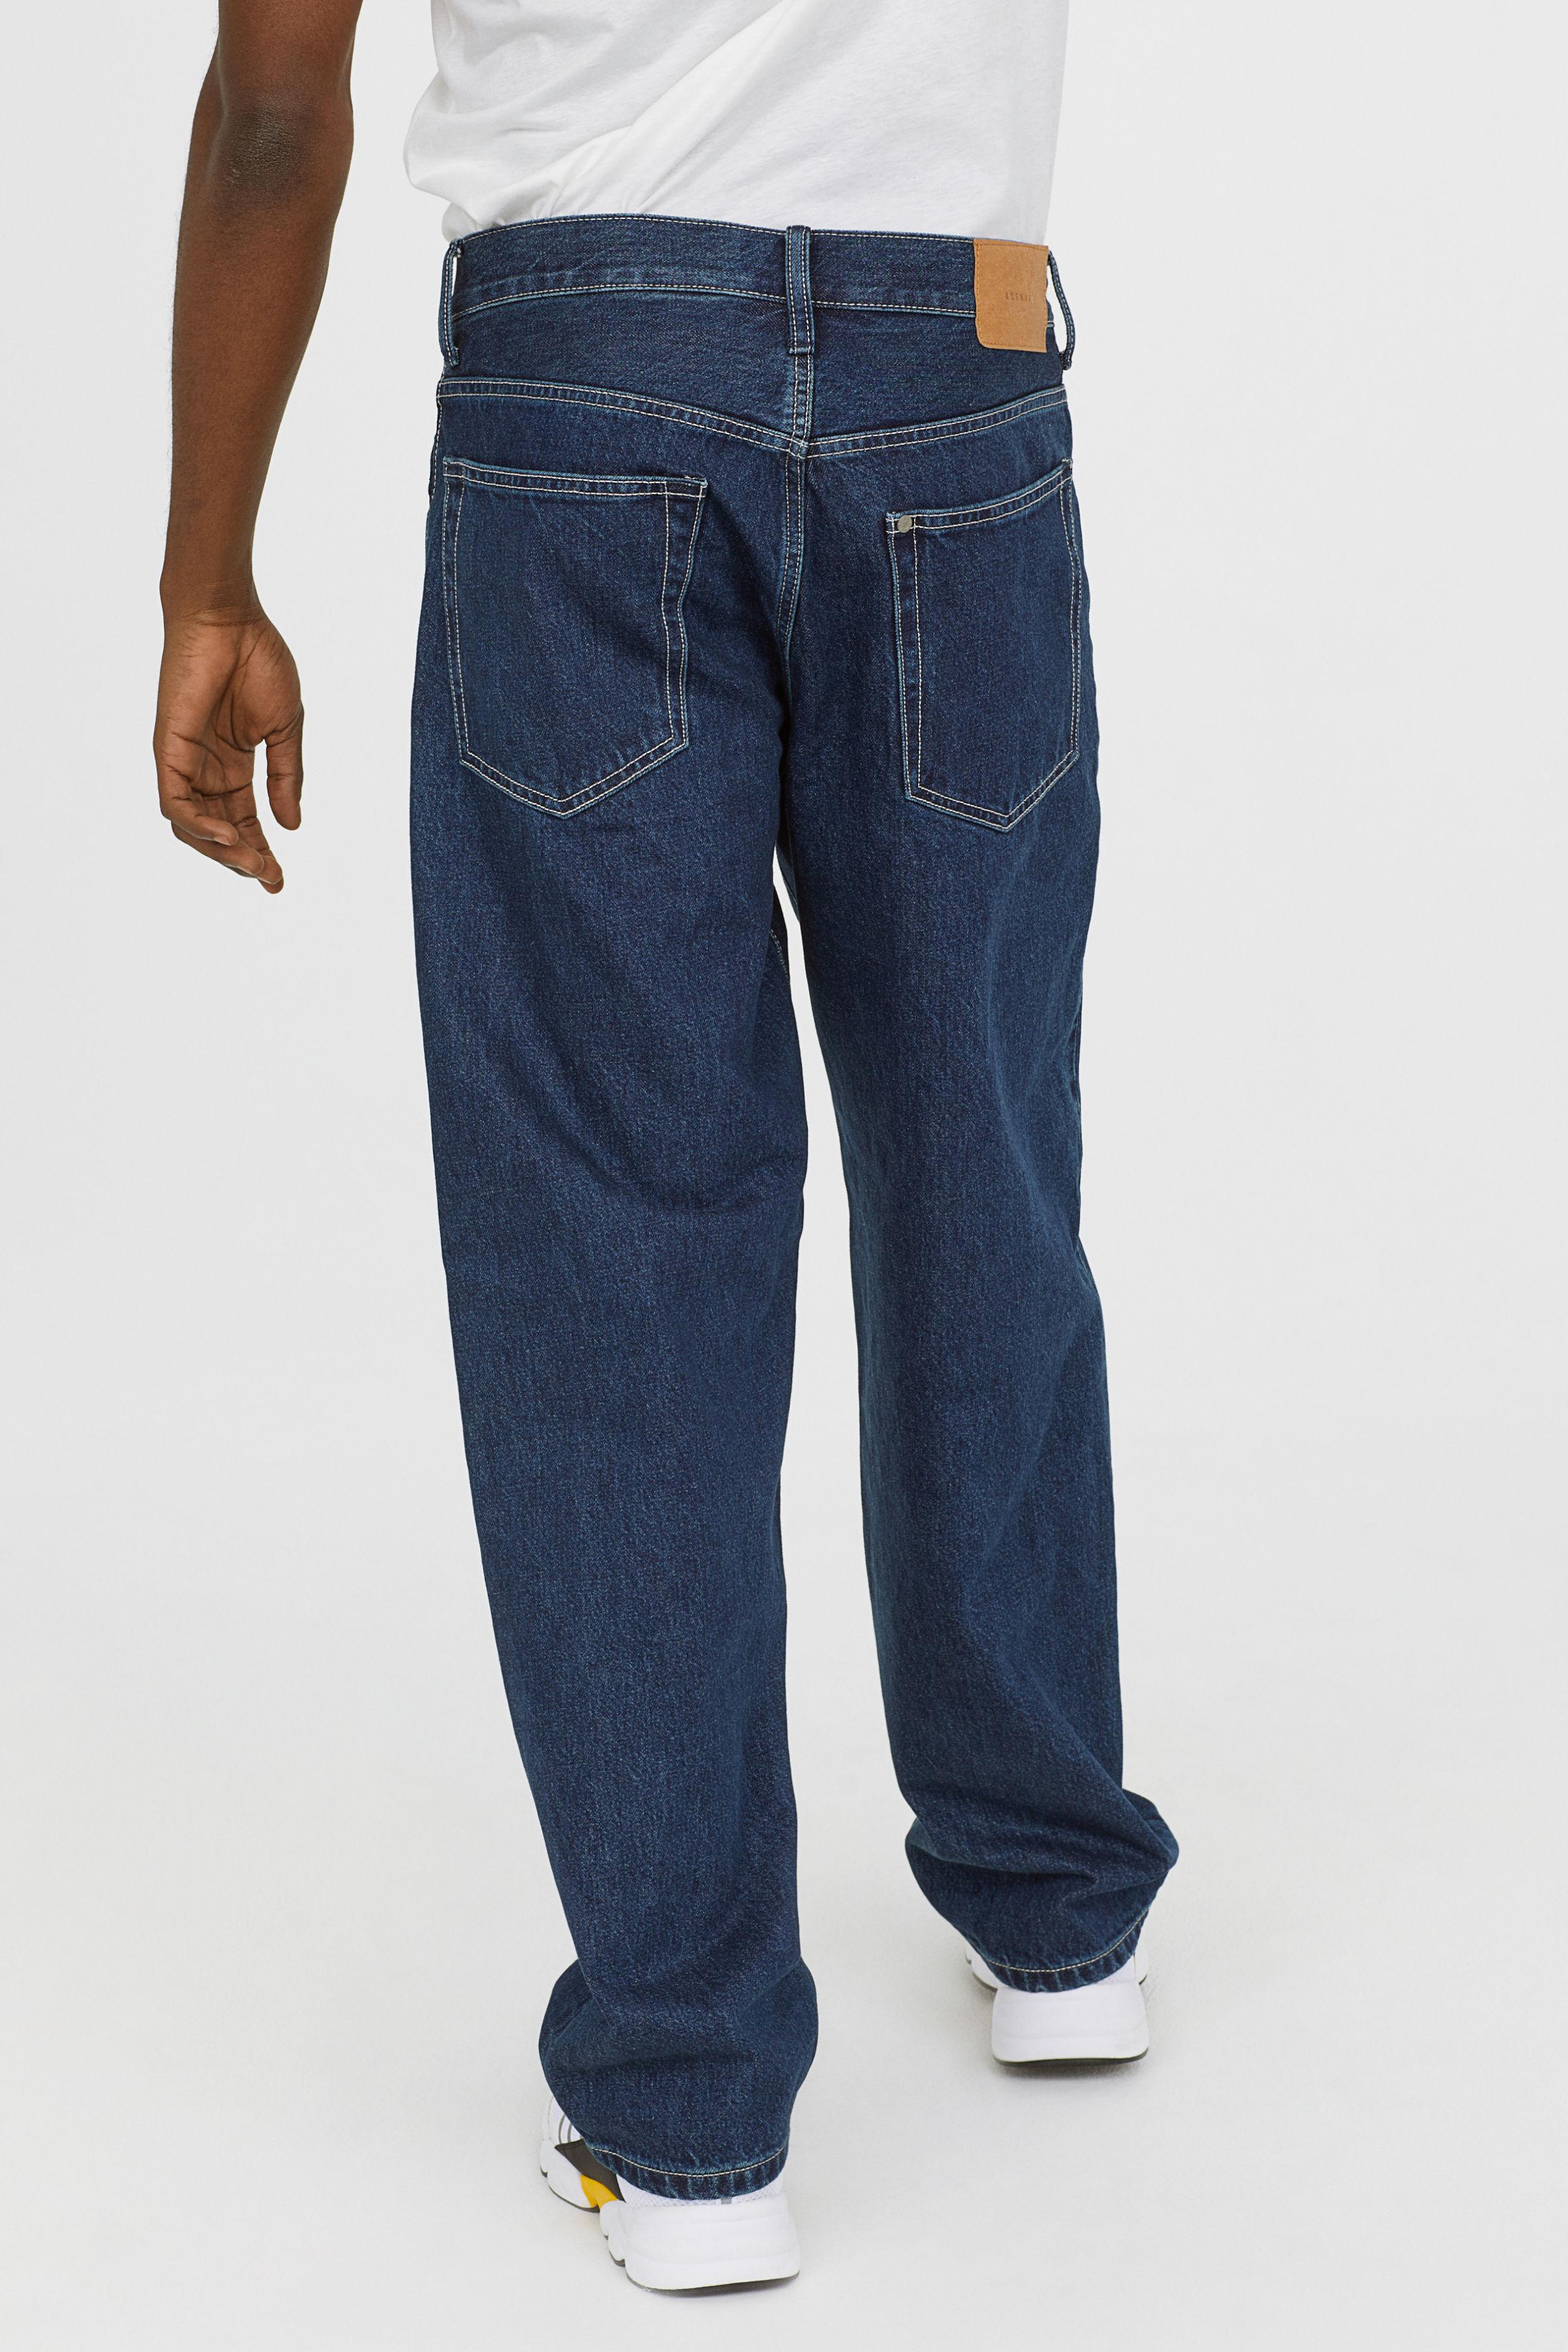 H&M Denim Baggy Jeans in Dark Denim Blue (Blue) for Men - Lyst